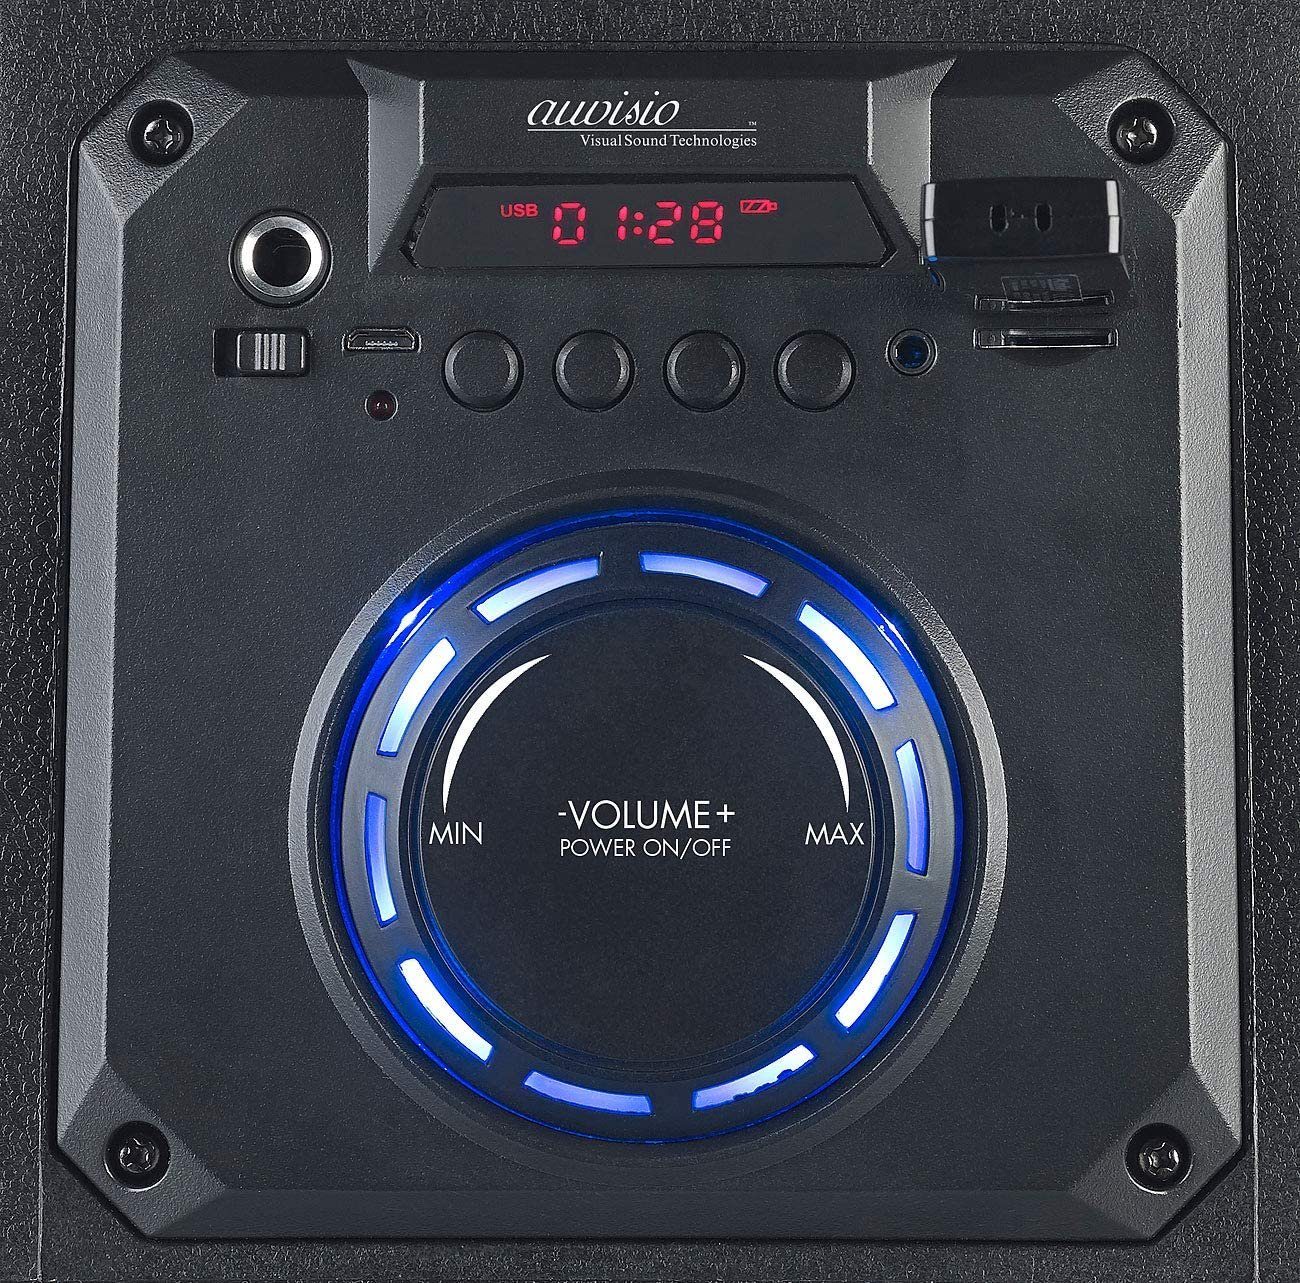 LED MP3 Beleuchtung) Partylautsprecher Bluetooth Party-Lautsprecher blaue PA-Partyanlage (25 W, PMA-950.k USB Mobile auvisio